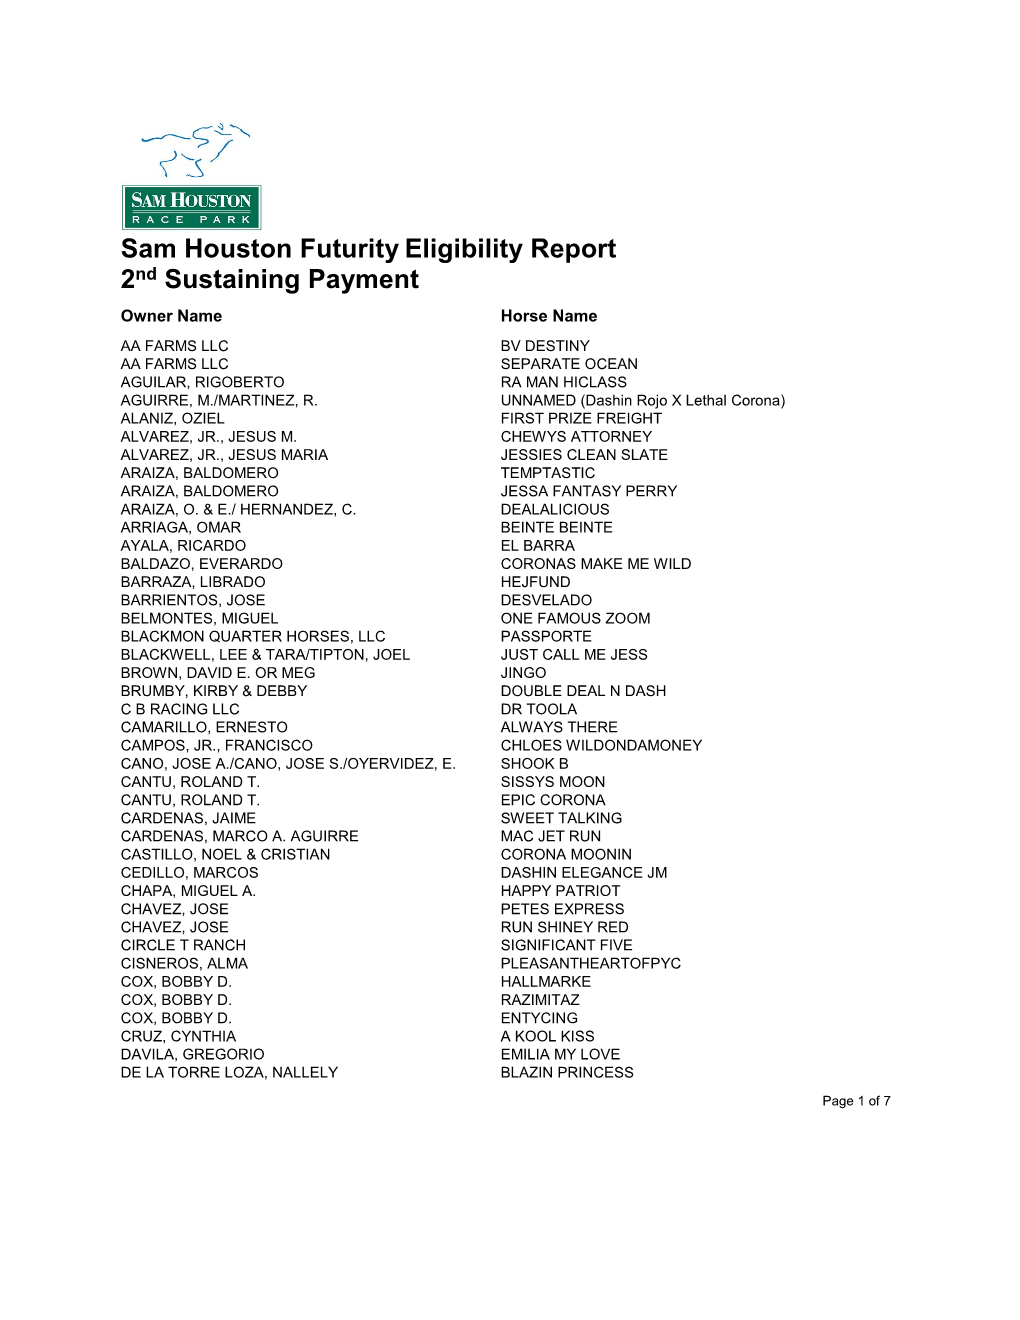 Sam Houston Futurity Eligibility Report 2Nd Sustaining Payment